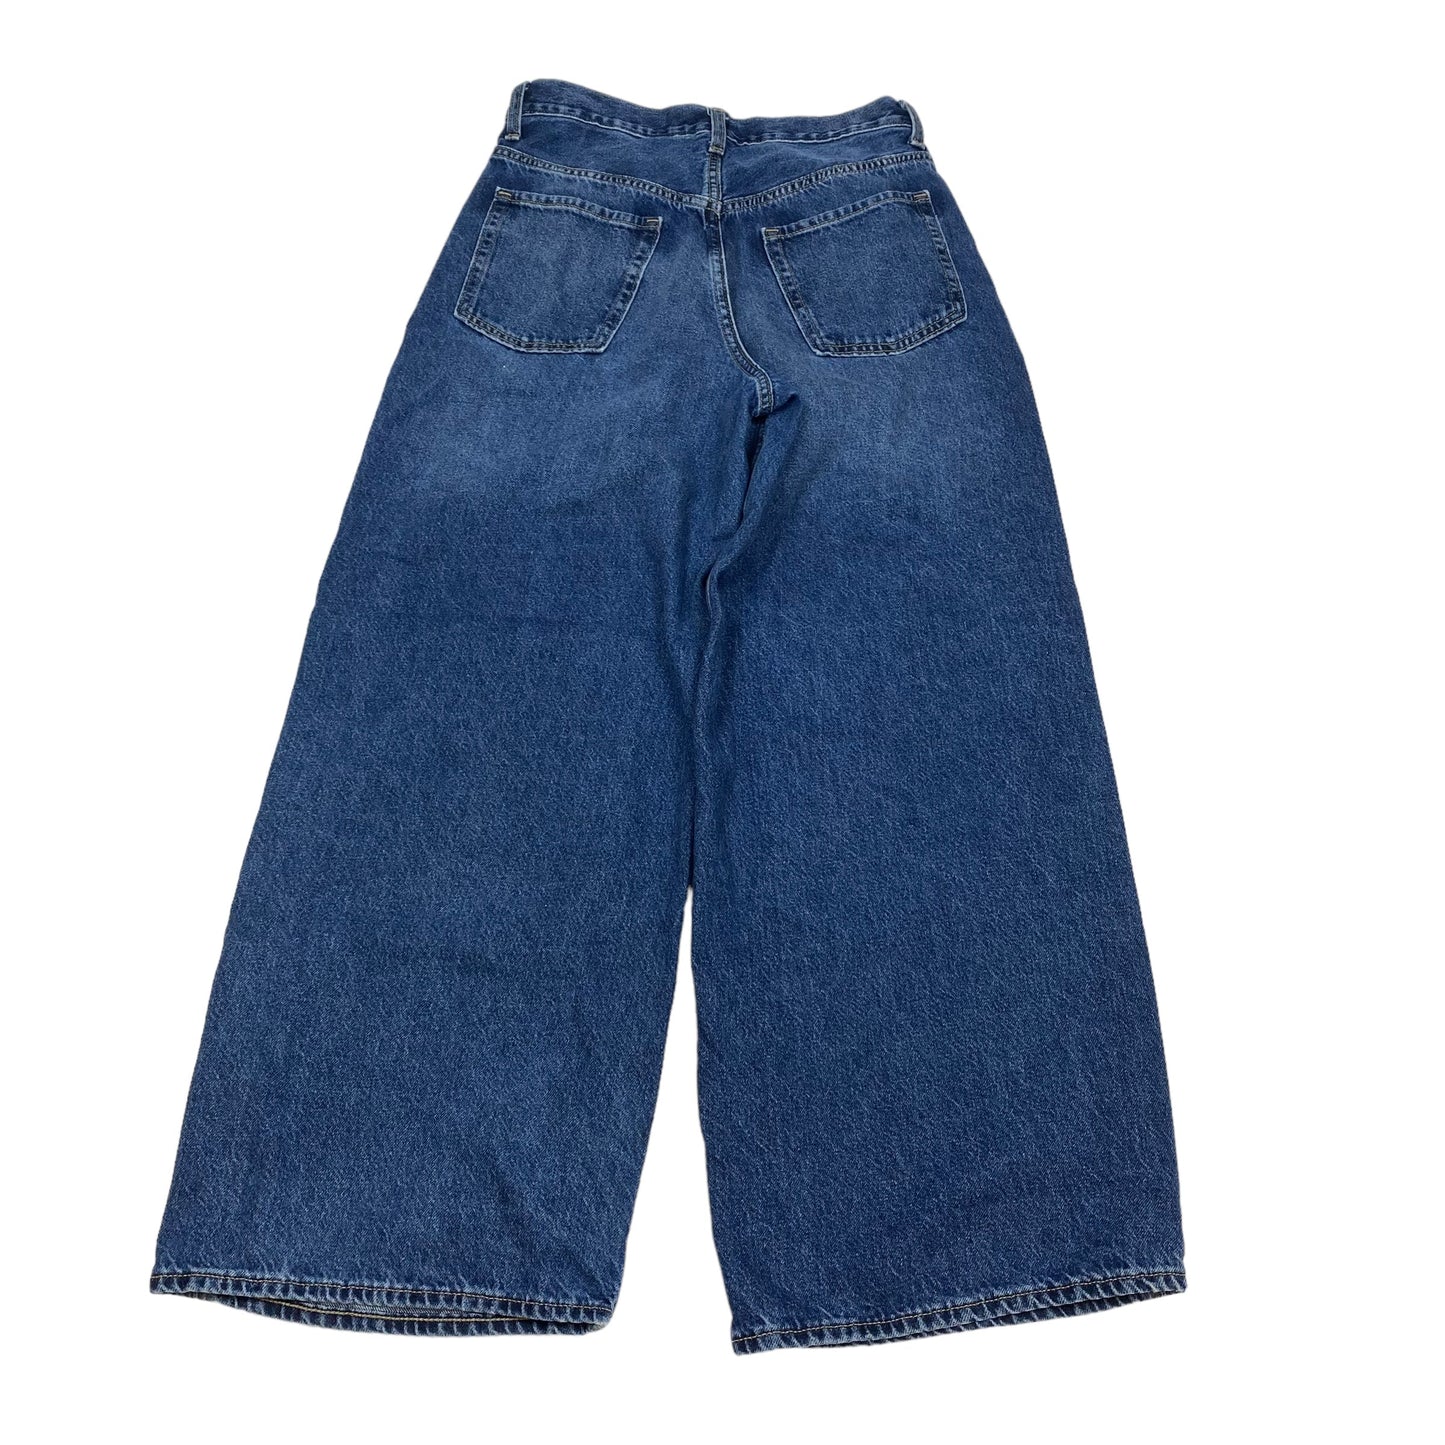 Blue Denim Jeans Wide Leg Old Navy, Size 8